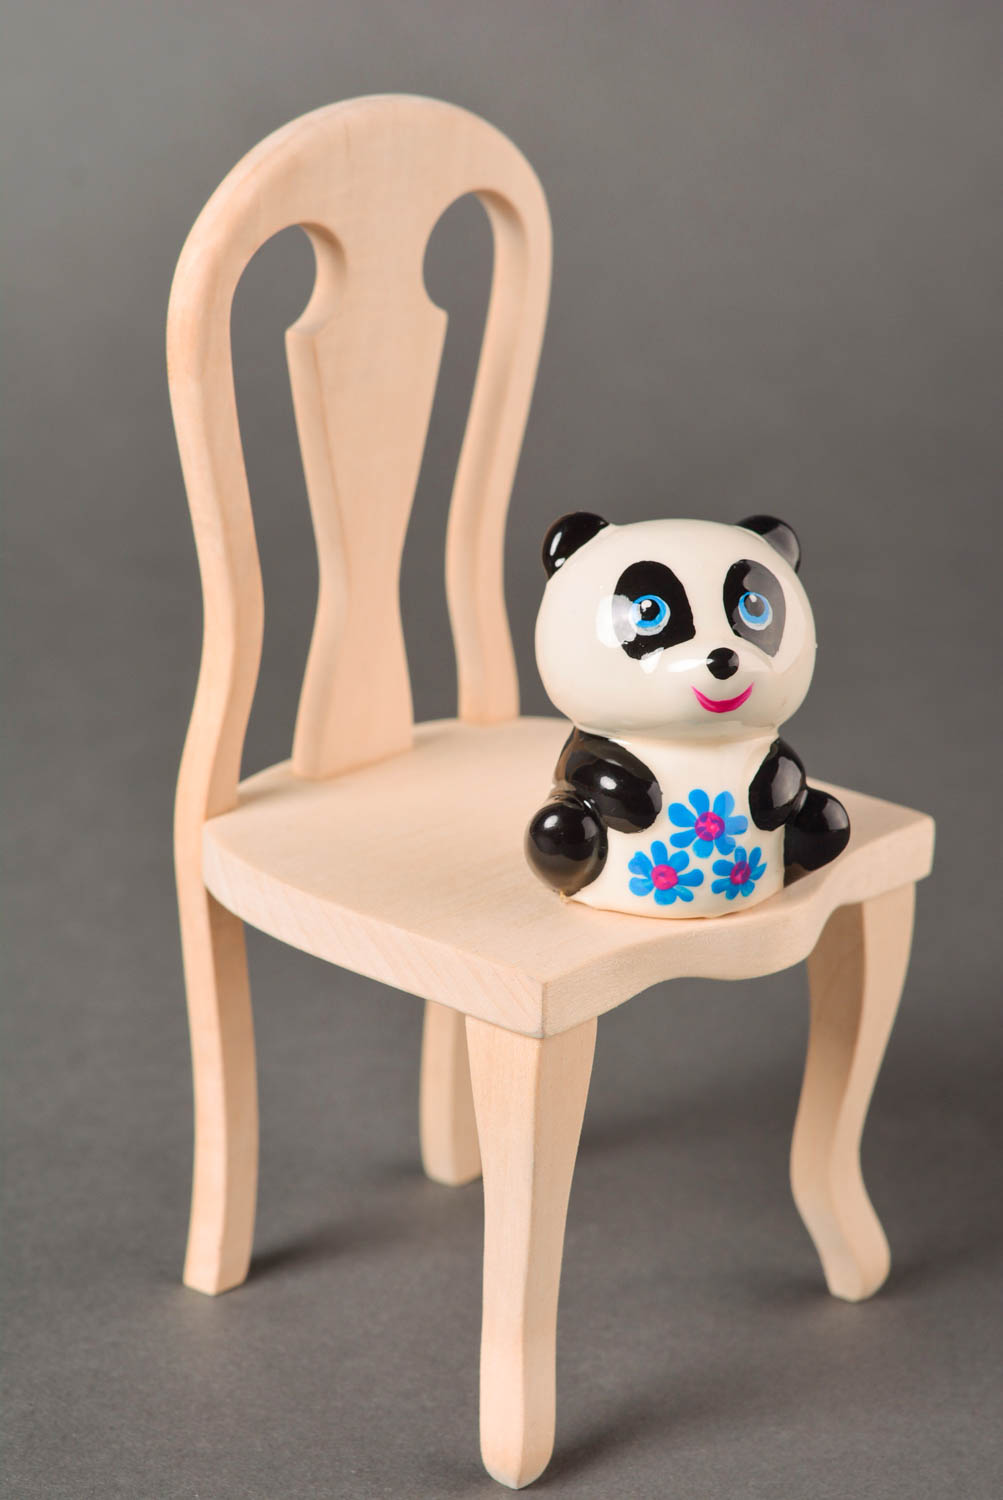 Handgefertigt Gips Figur Deko Wohnzimmer kreative Geschenkidee Panda foto 1